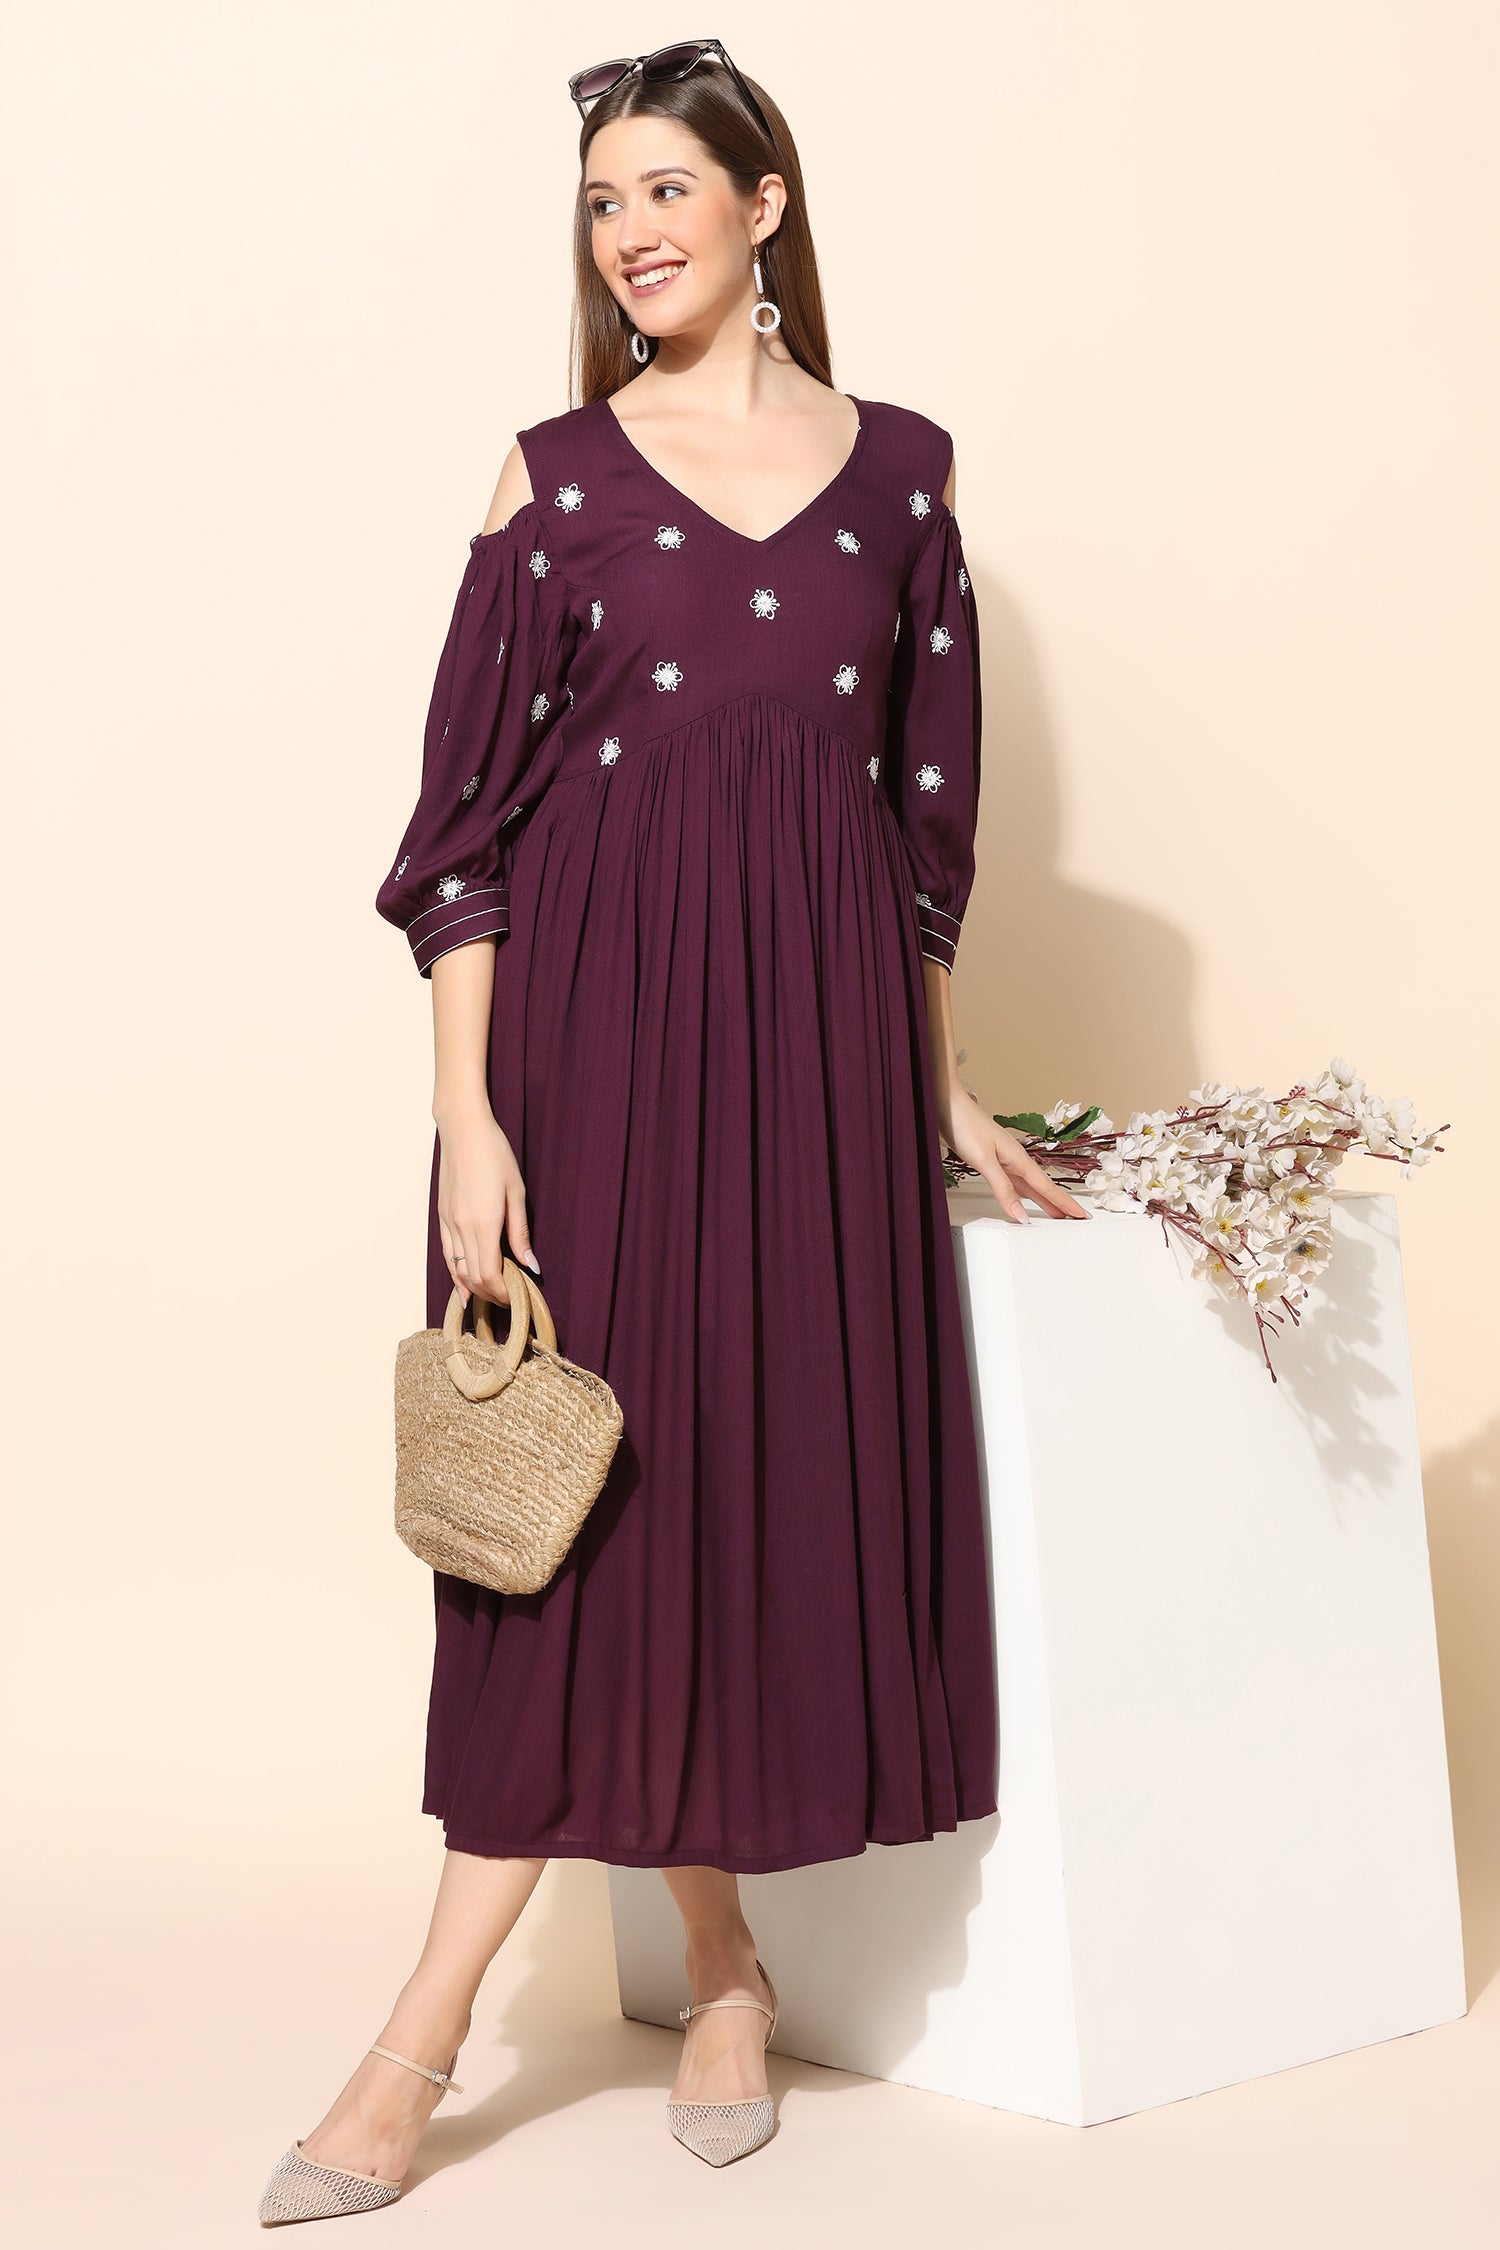 Buy KTRIKSHA Combo Dresses for Women High-Low Dress Empire Waist Dress A- line Embroidery Dress Sundress (Pack of 2) 1006-BL-1007 Black at Amazon.in